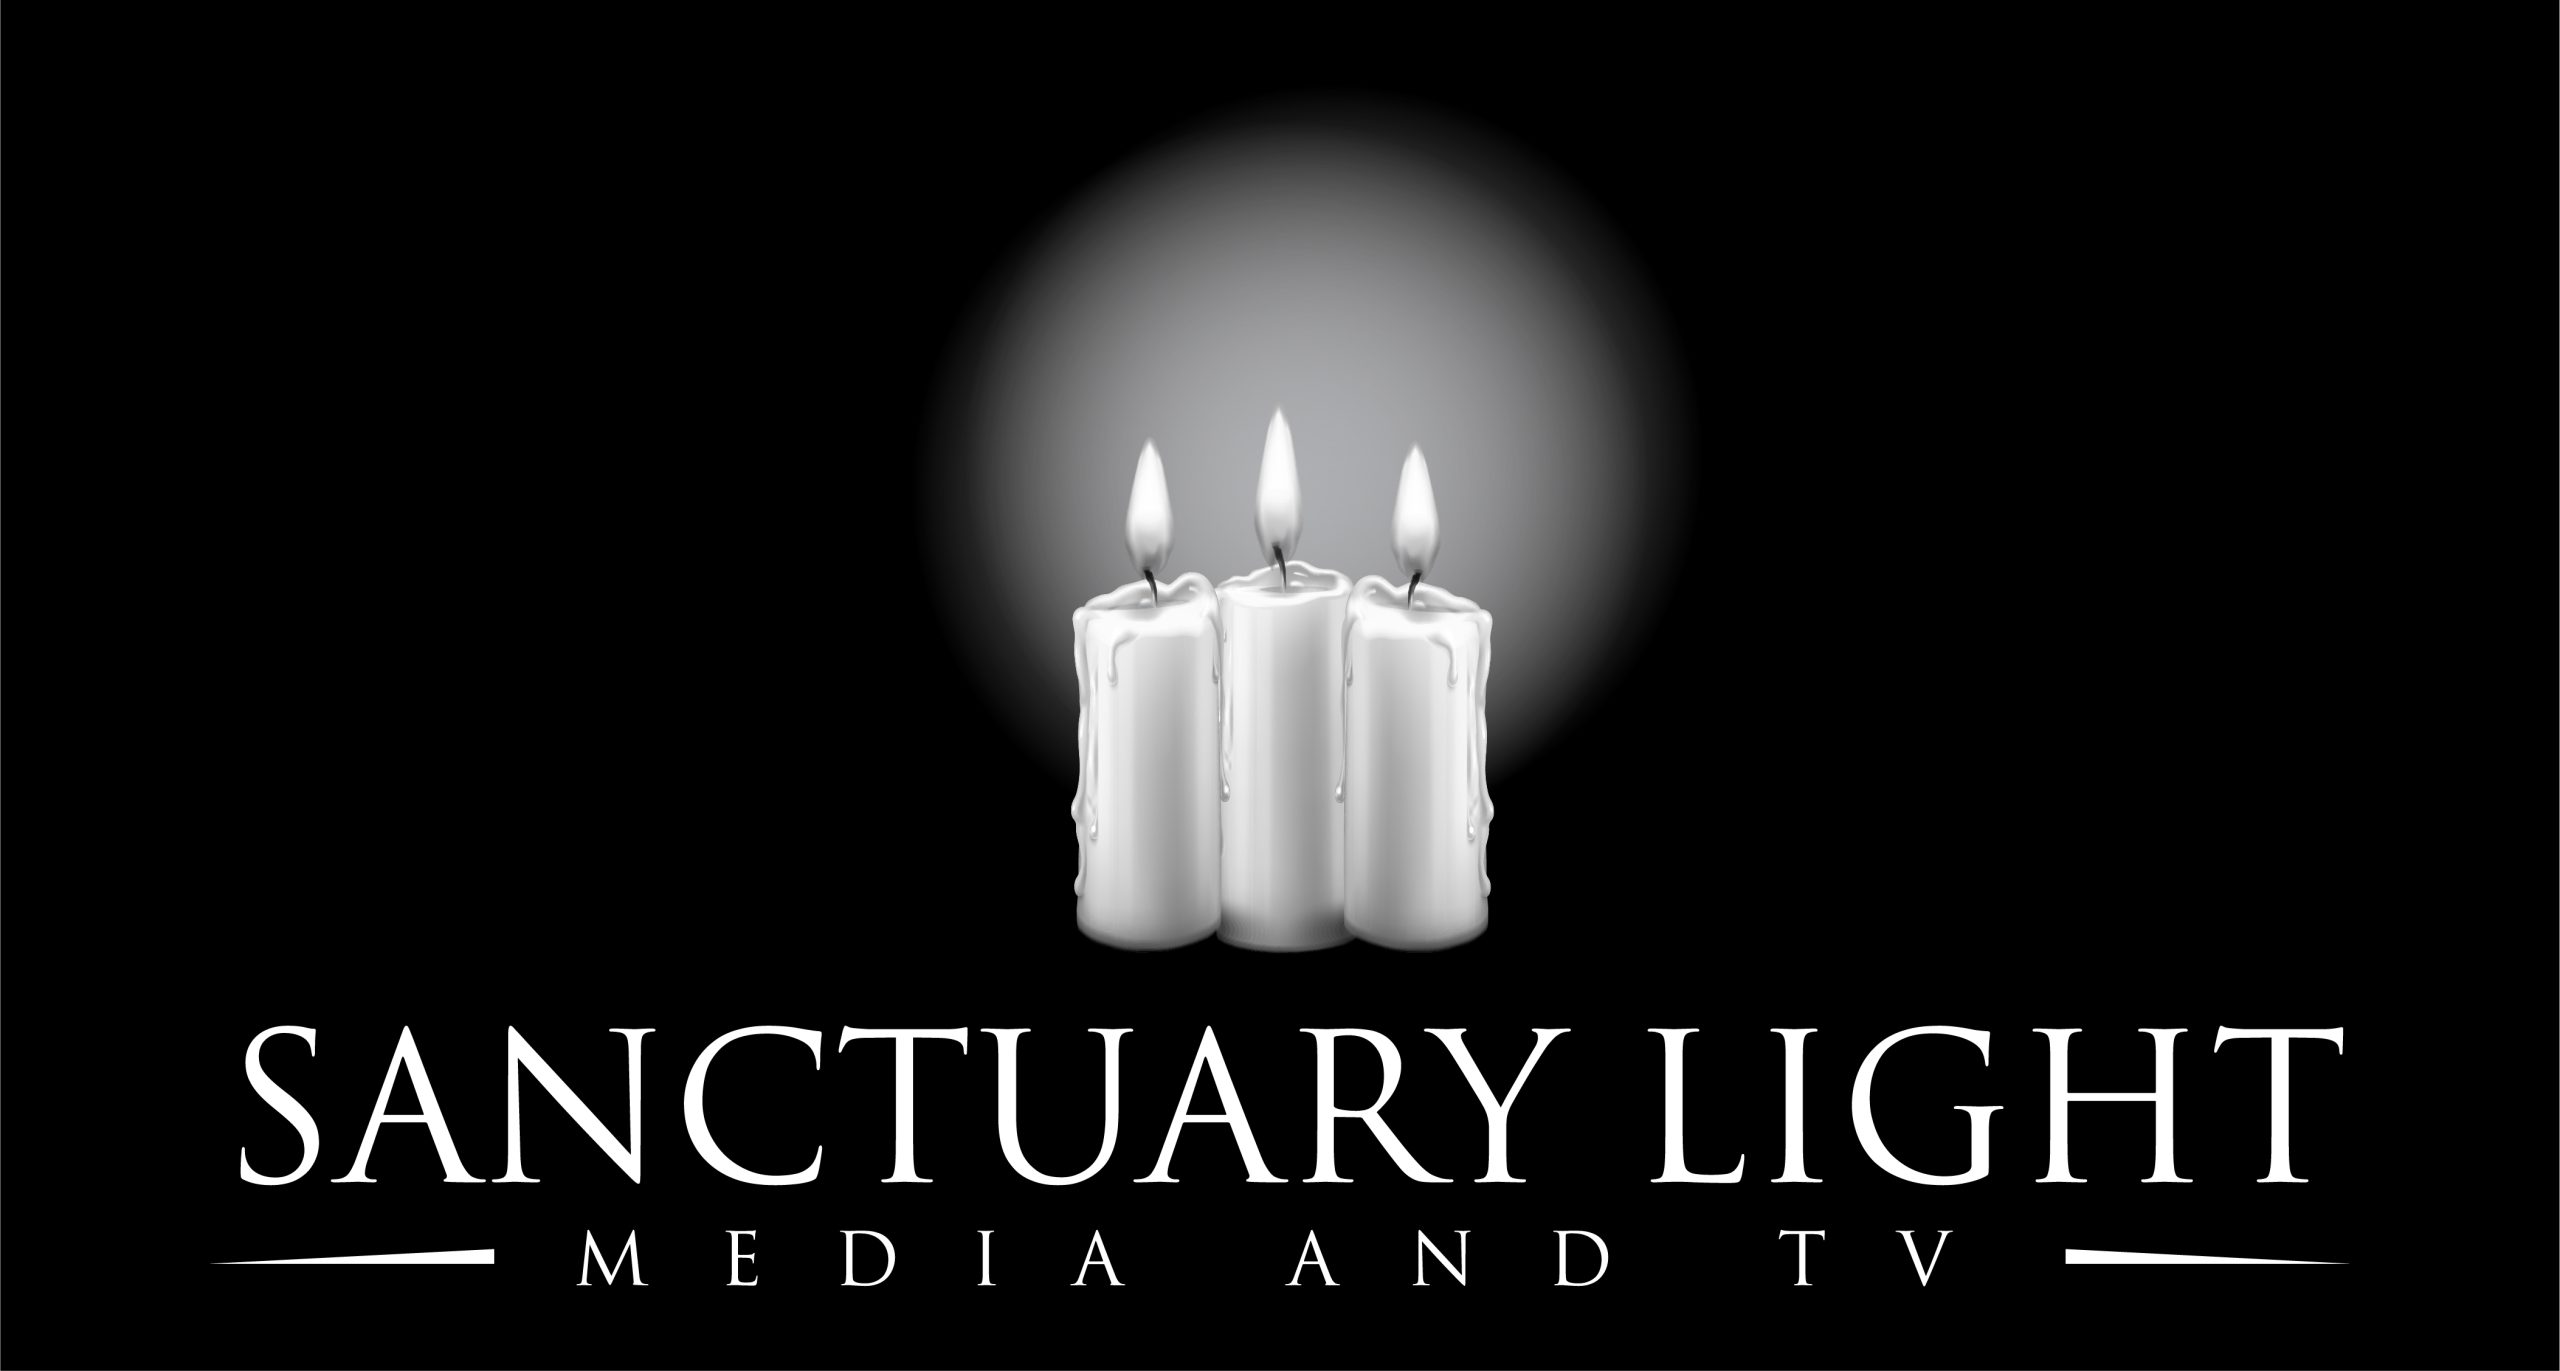 The Sanctuary Light